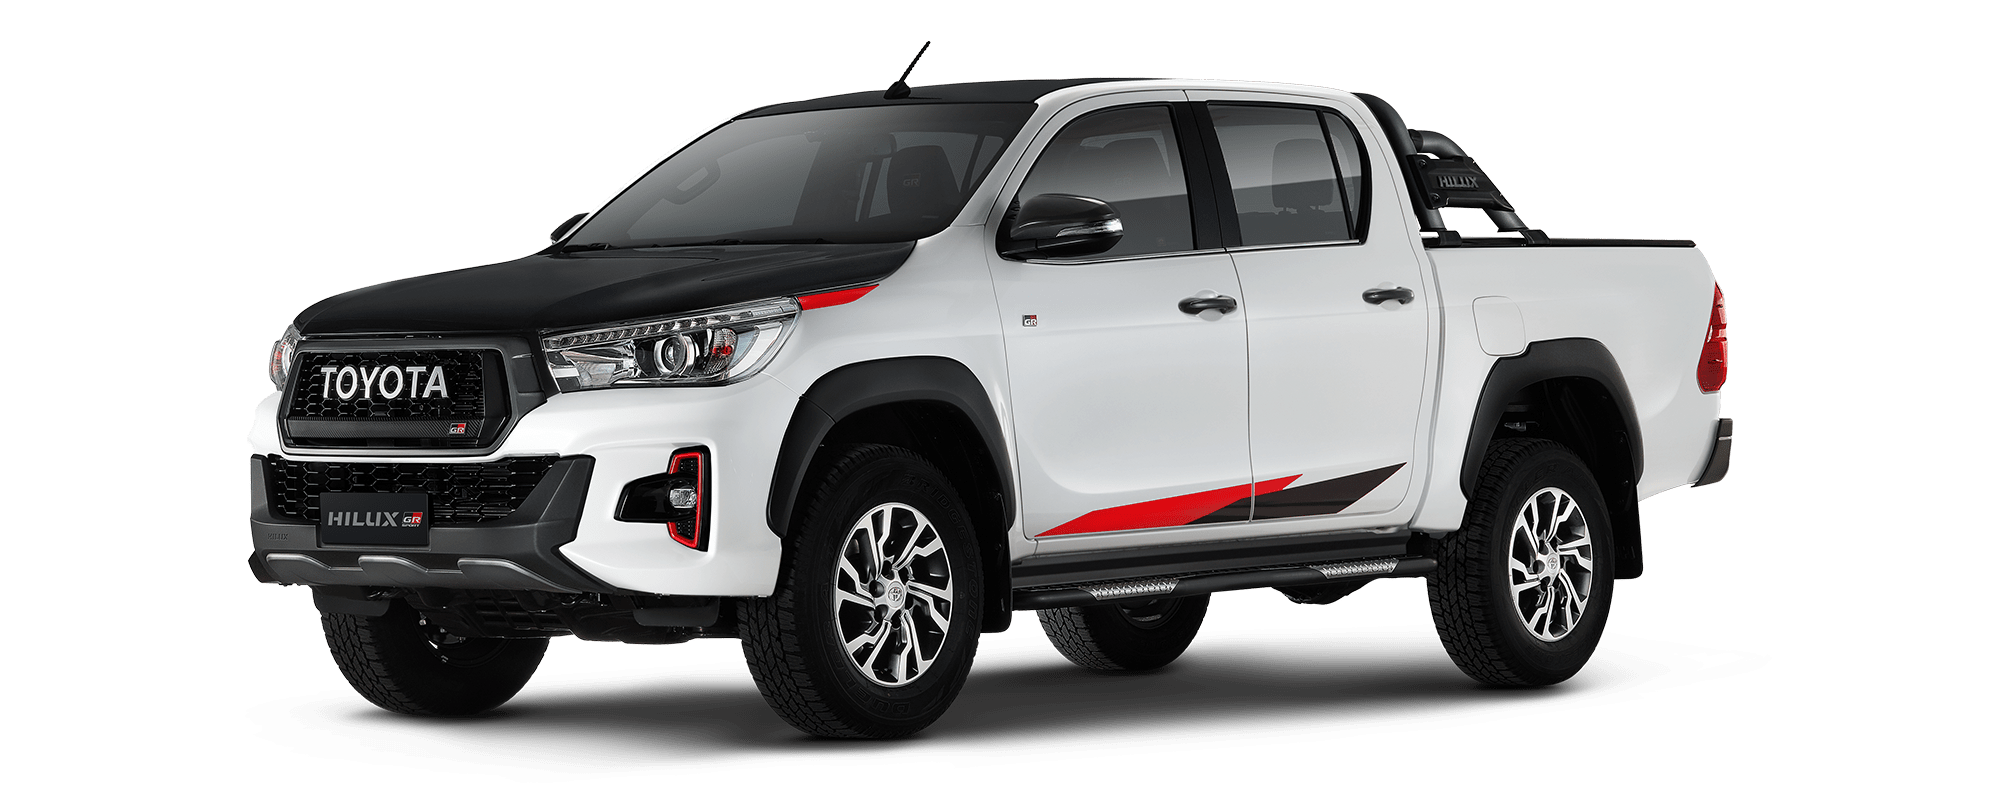 Toyota Hilux GR Sport: Características, precios y test